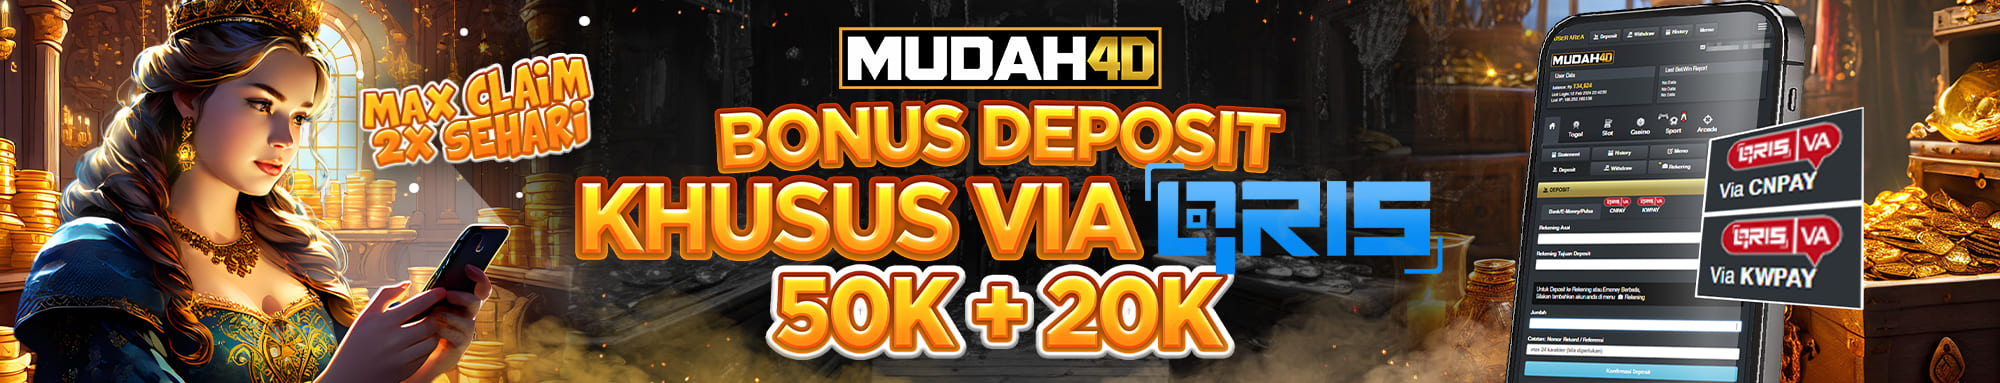 Bonus Deposit 50   20 Mudah4d